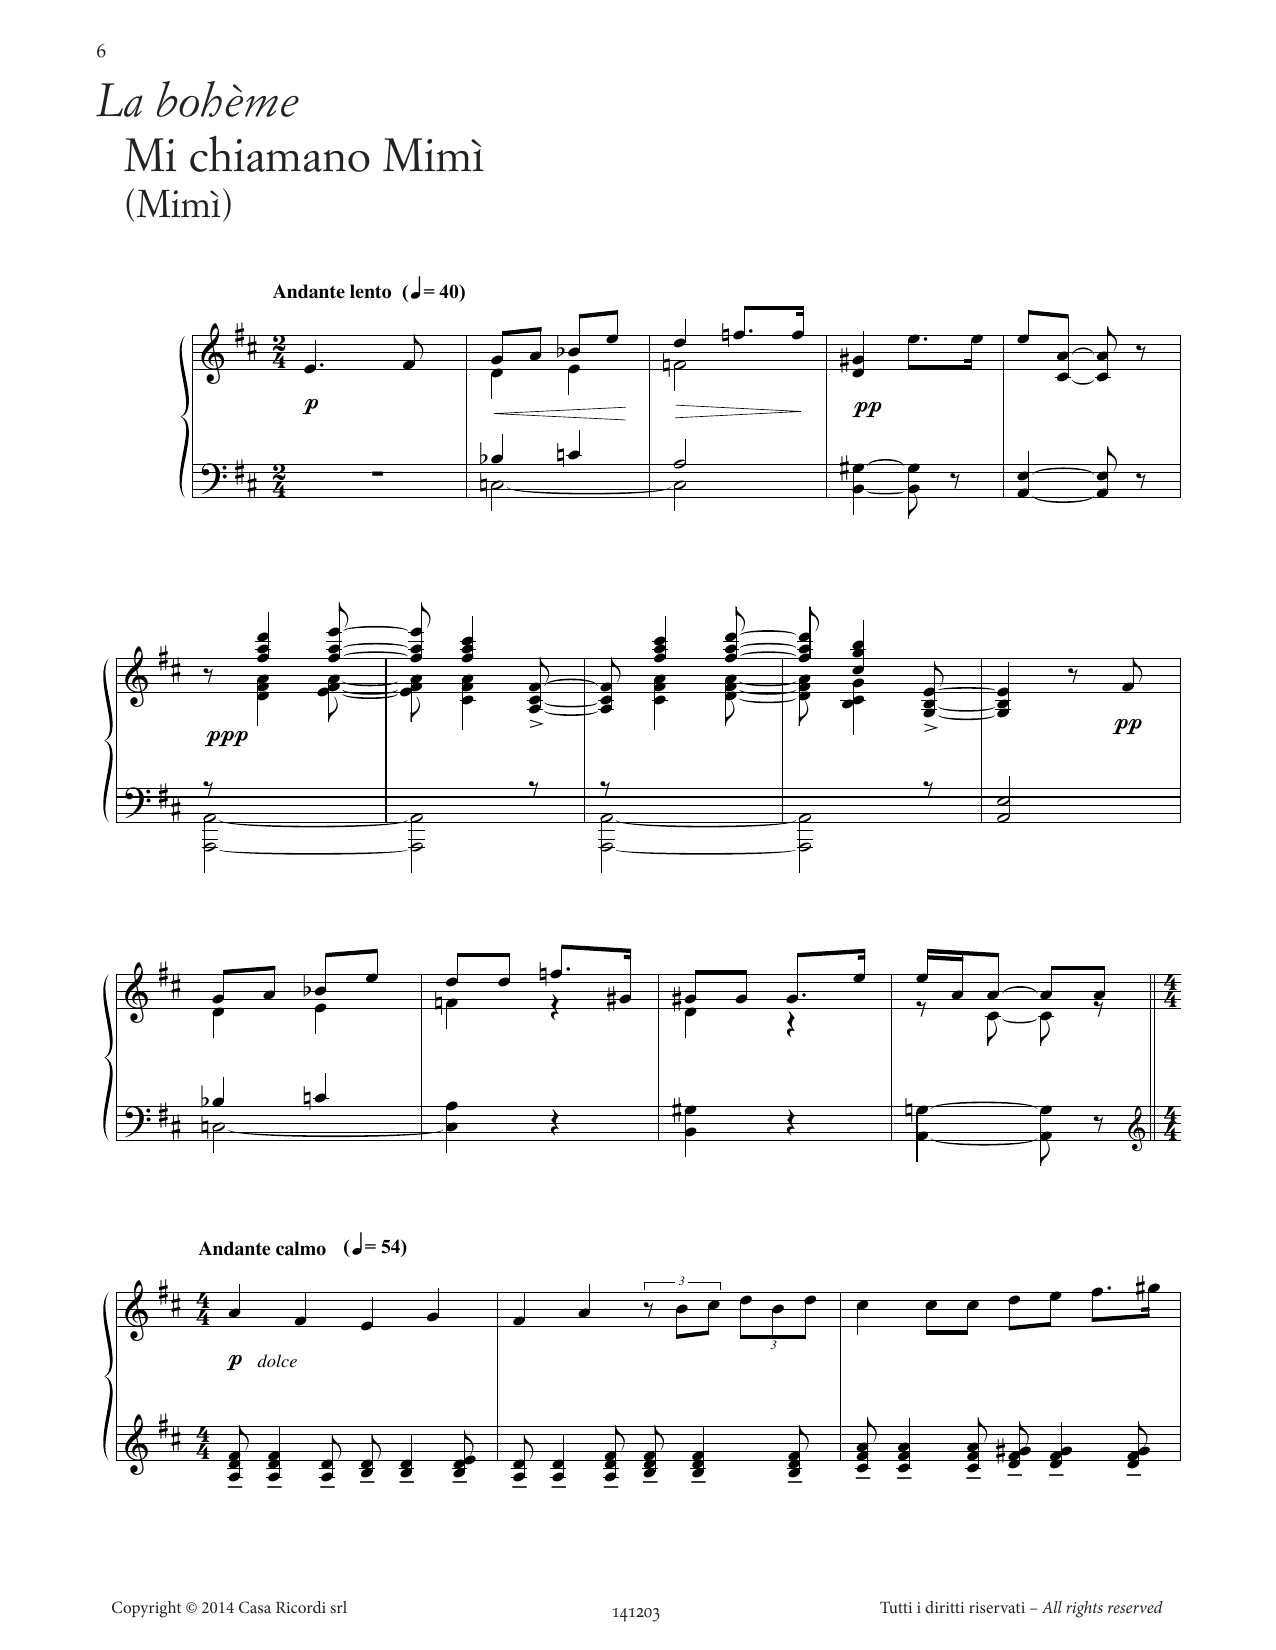 Giacomo Puccini Mi chiamano Mimì (from La Bohème) Sheet Music Notes & Chords for Piano Solo - Download or Print PDF